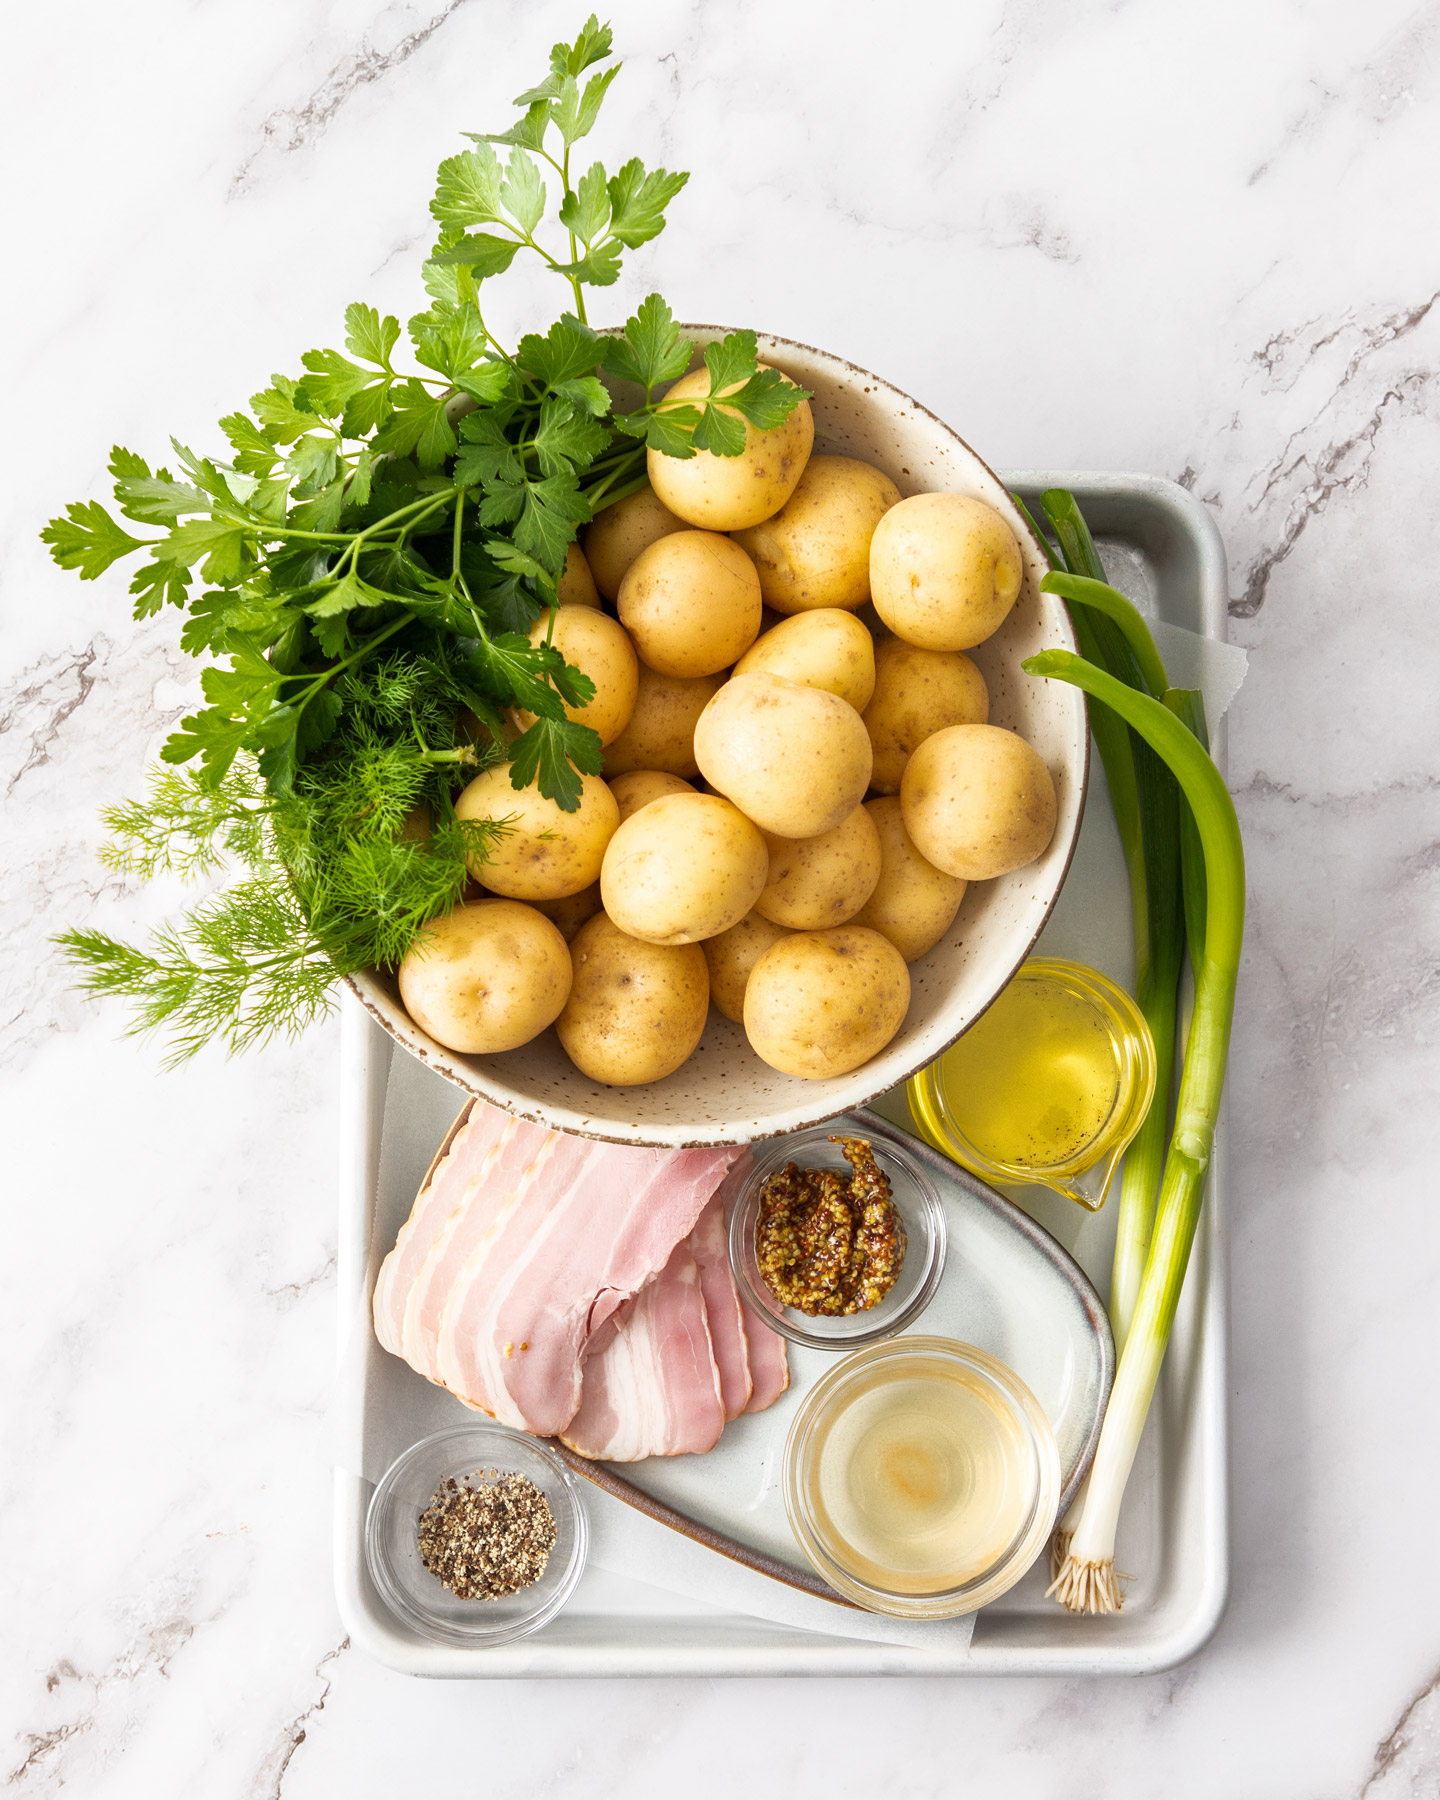 Ingredients for mayo free potato salad.